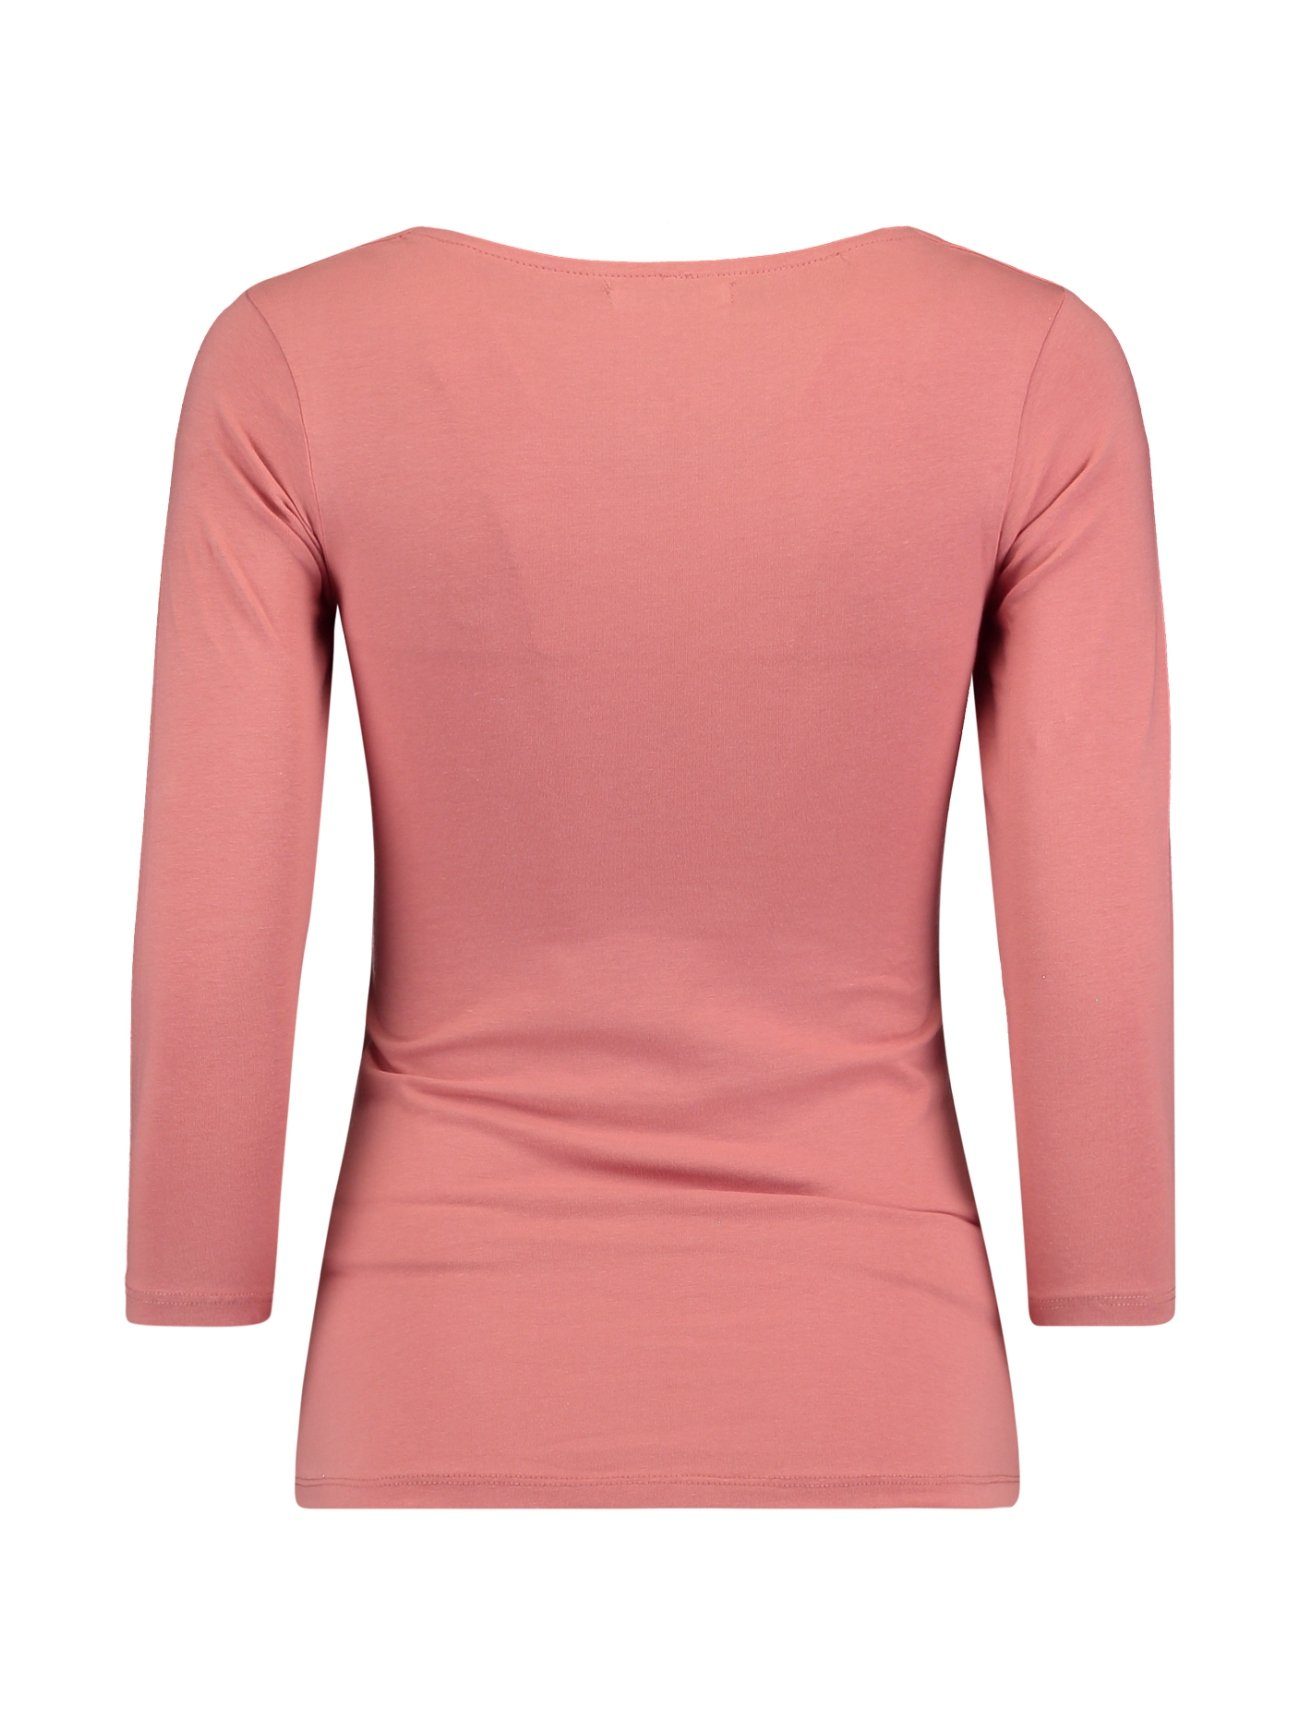 HaILY’S T-Shirt Dünnes Stück Pink-2 Shirt in (2-tlg) Arm 2-er 3/4 4691 NOA Stretch Set Longsleeve